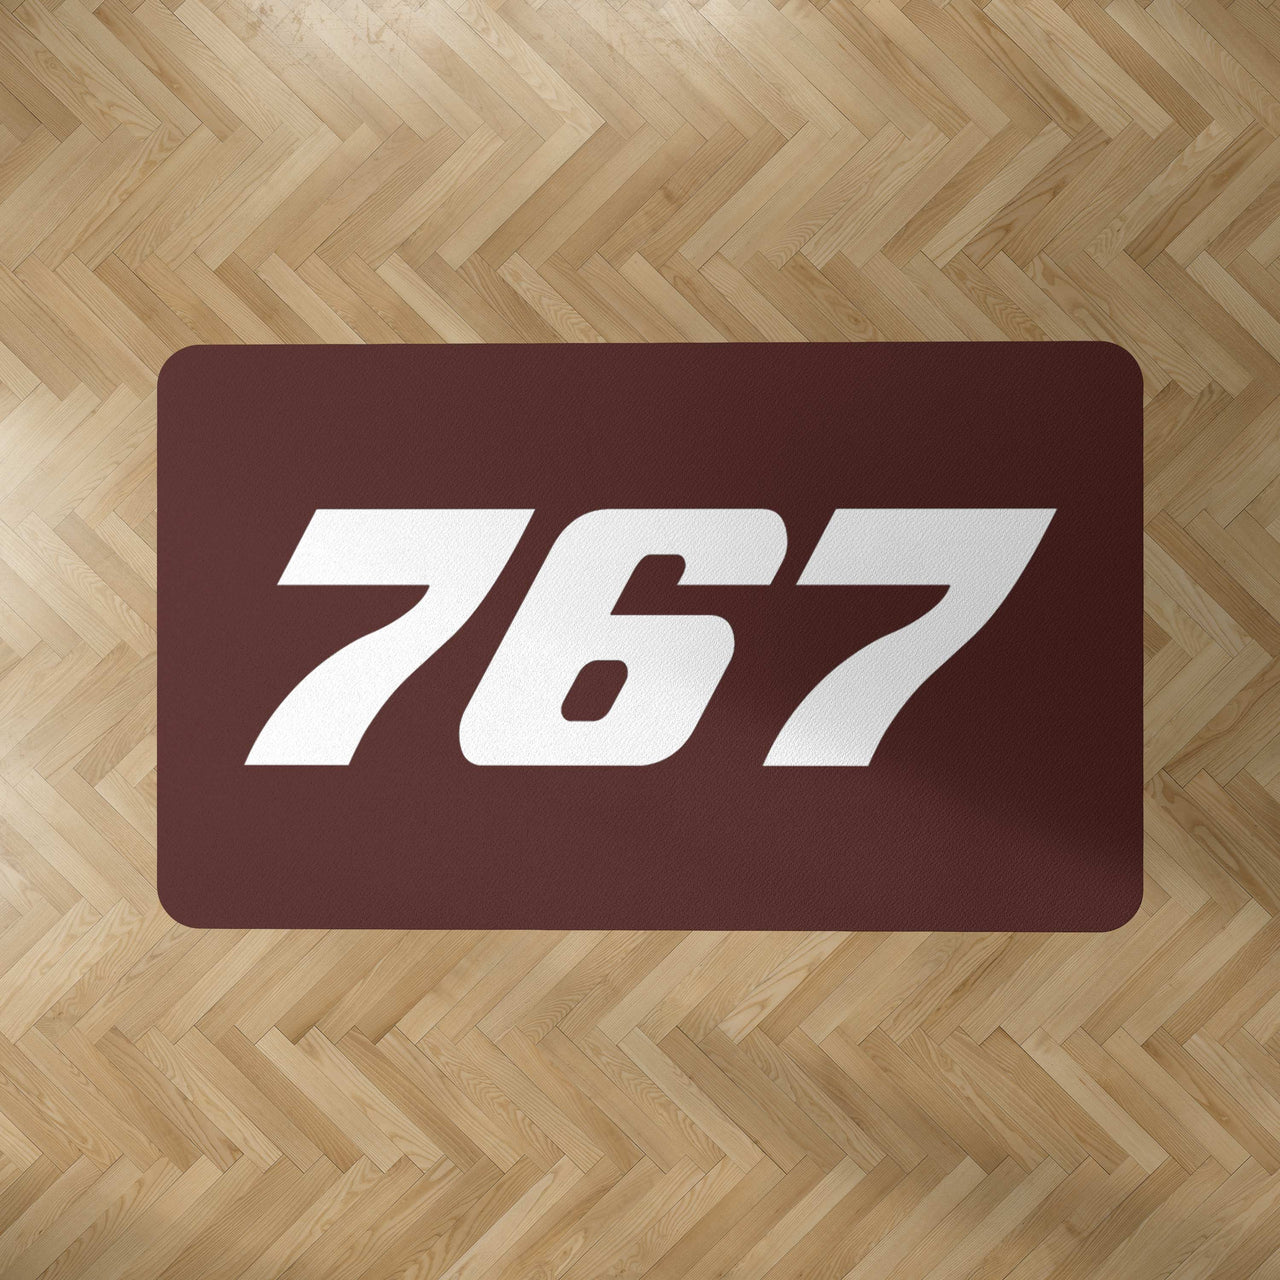 767 Flat Text Designed Carpet & Floor Mats